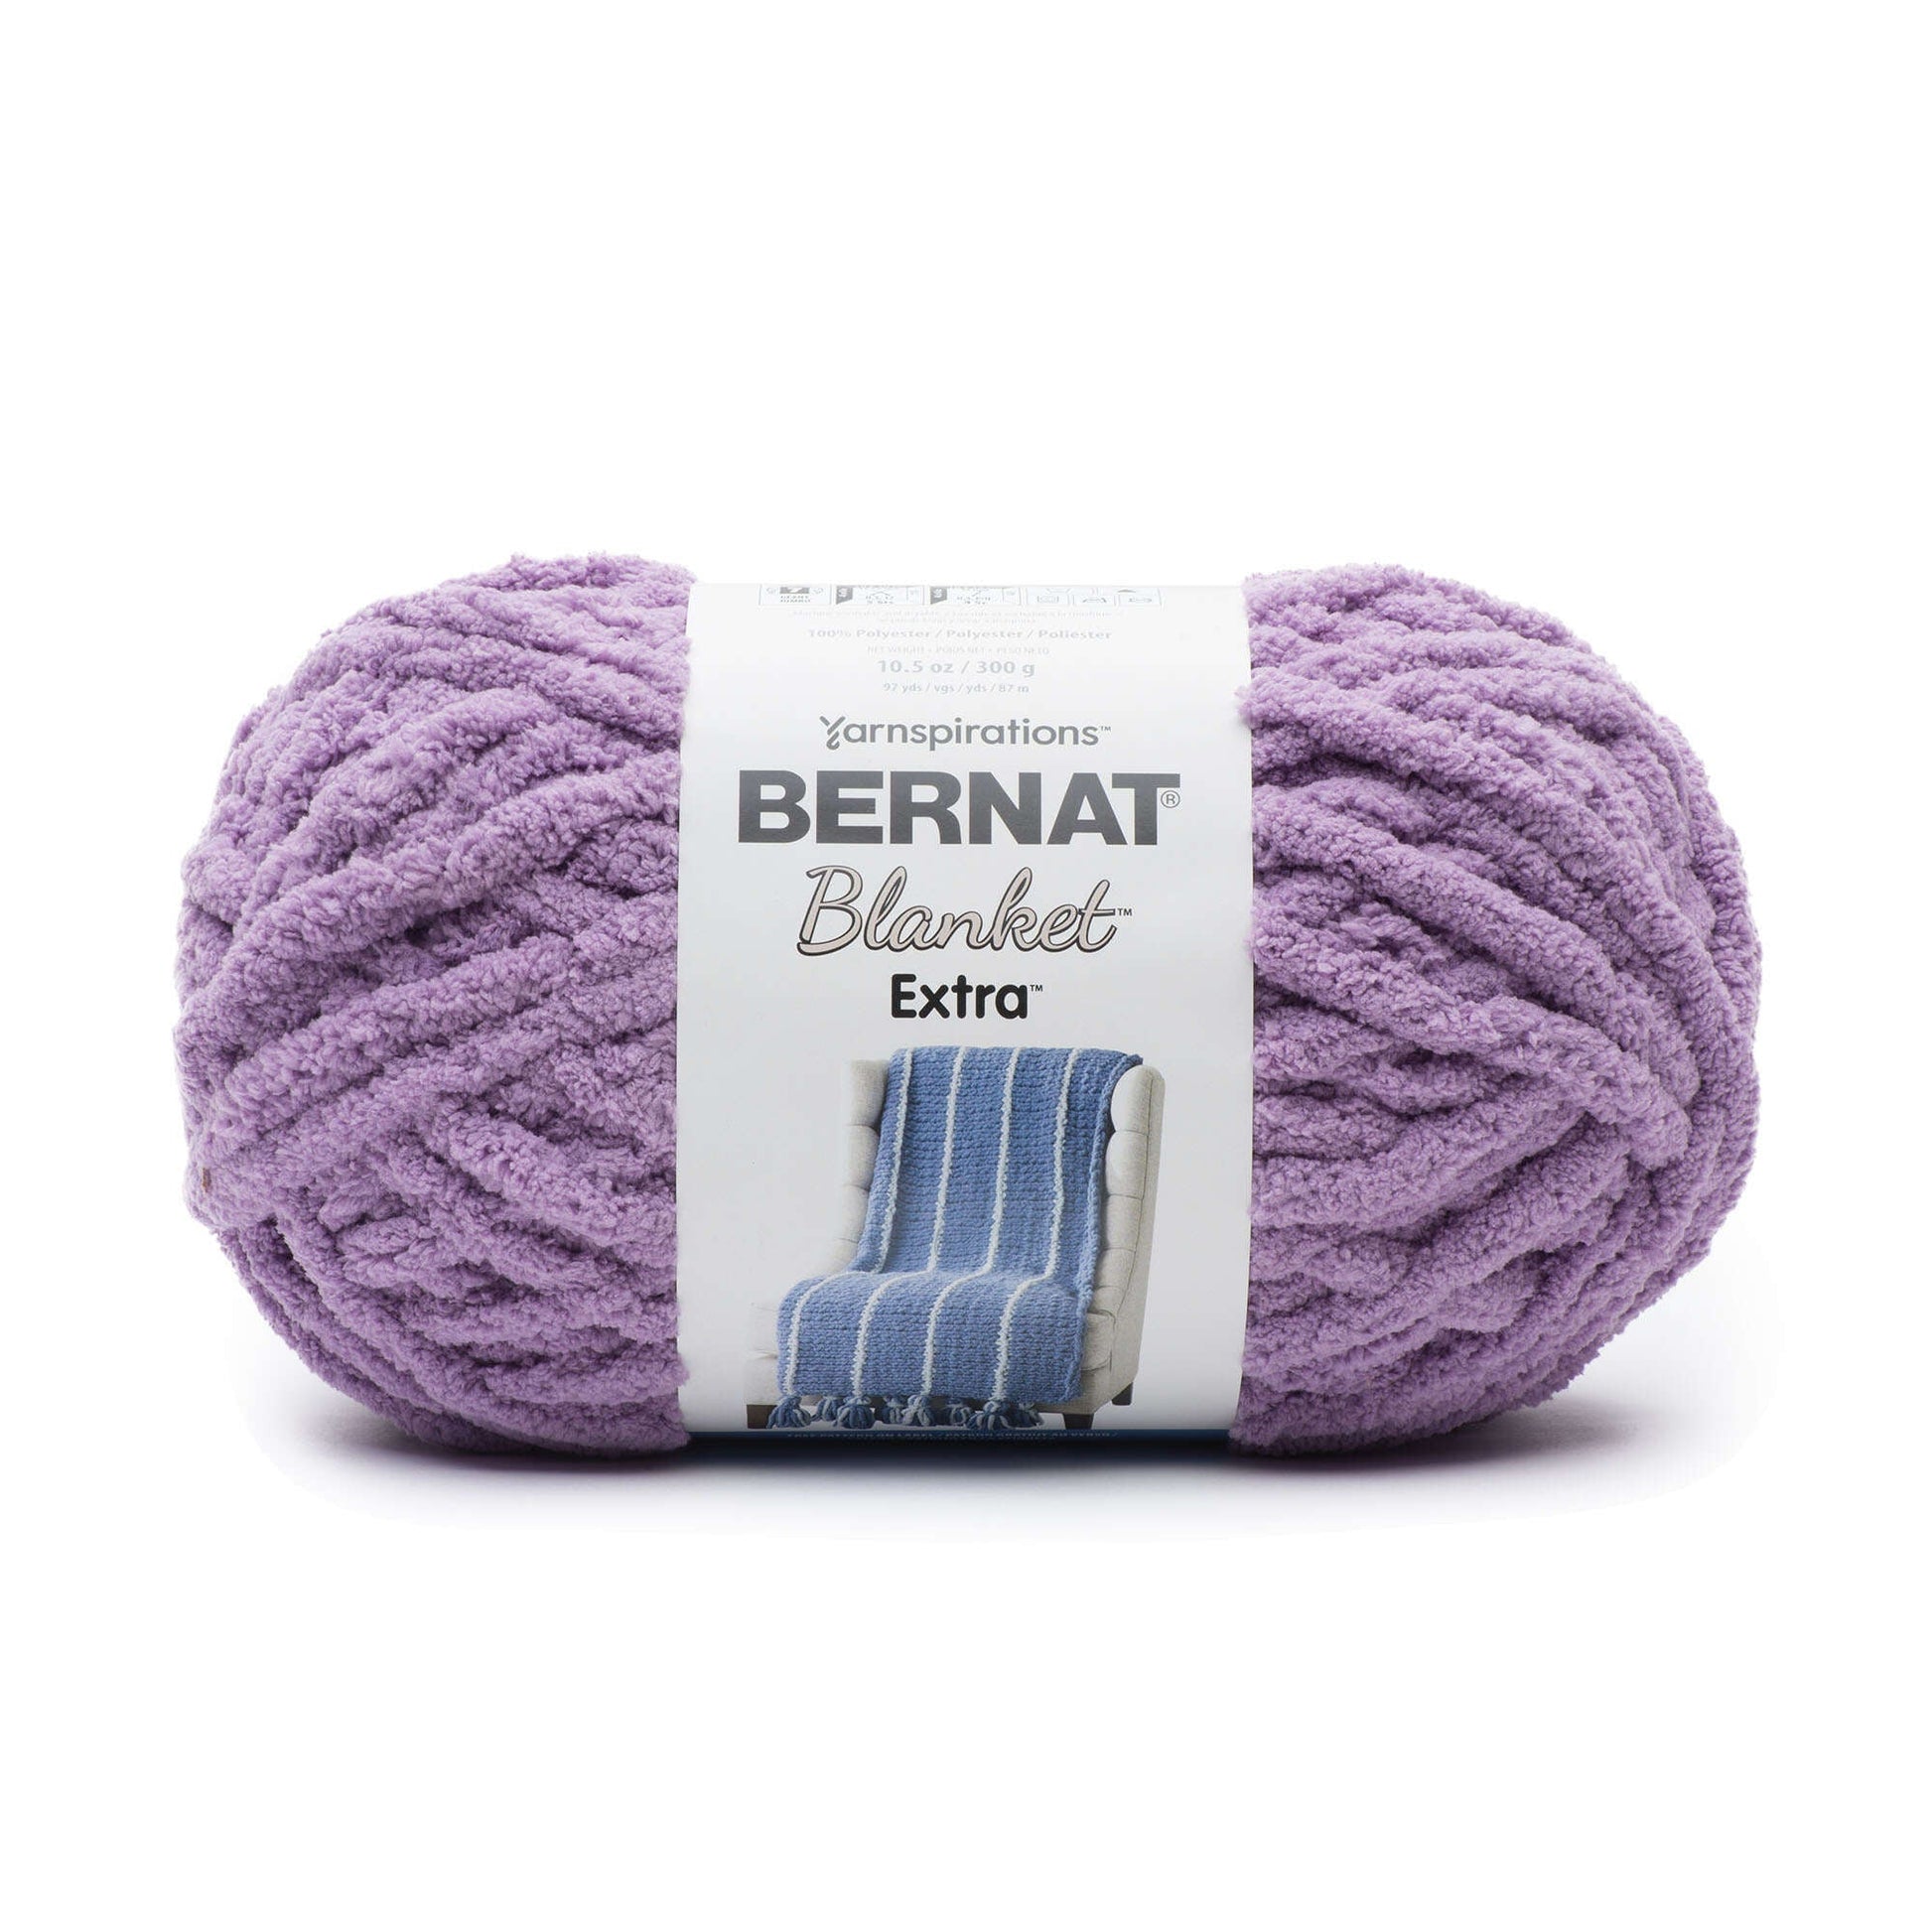 Bernat Blanket Extra Yarn (300g/10.5oz) - Clearance Shades*